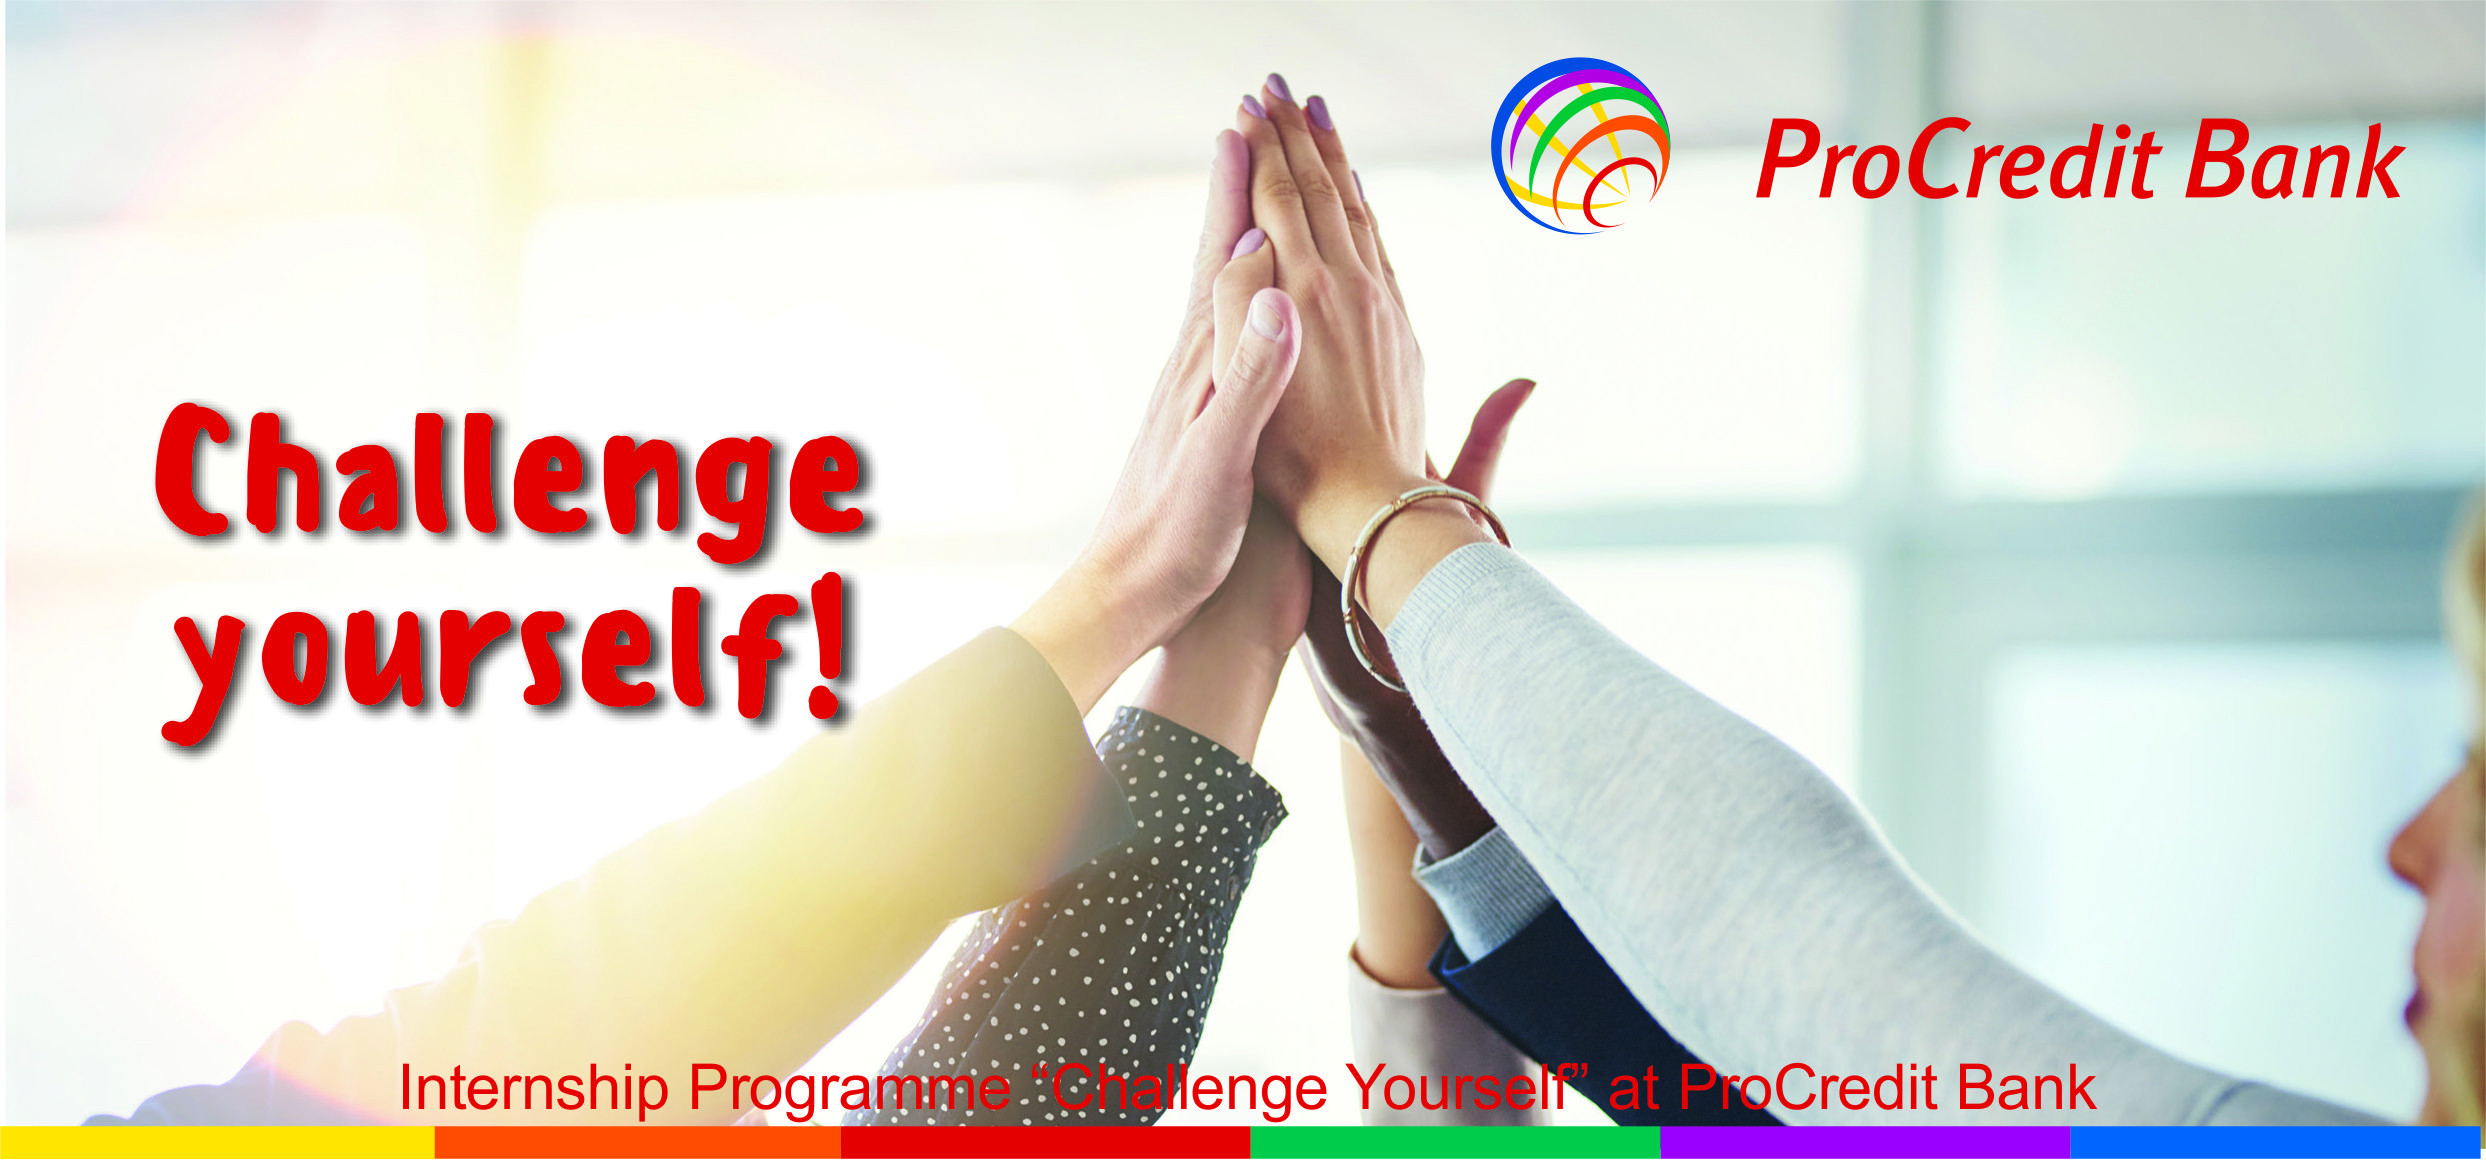 Internship Programme “Challenge Yourself” at ProCredit Bank